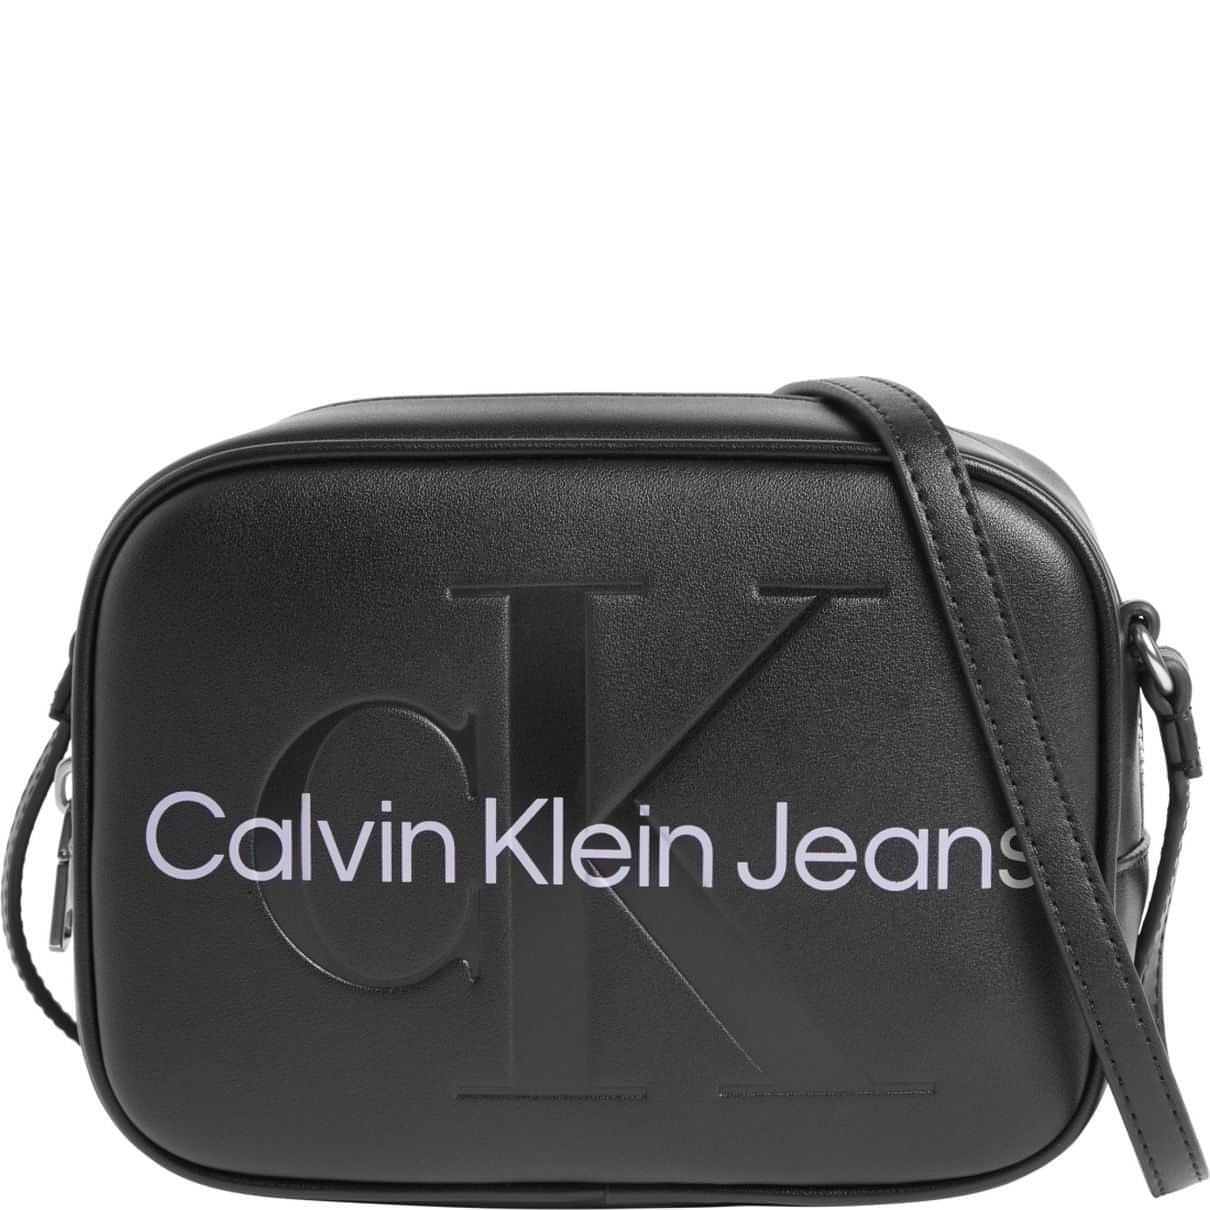 CALVIN KLEIN JEANS moteriška juoda rankinė per petį Sculpted camera bag mono